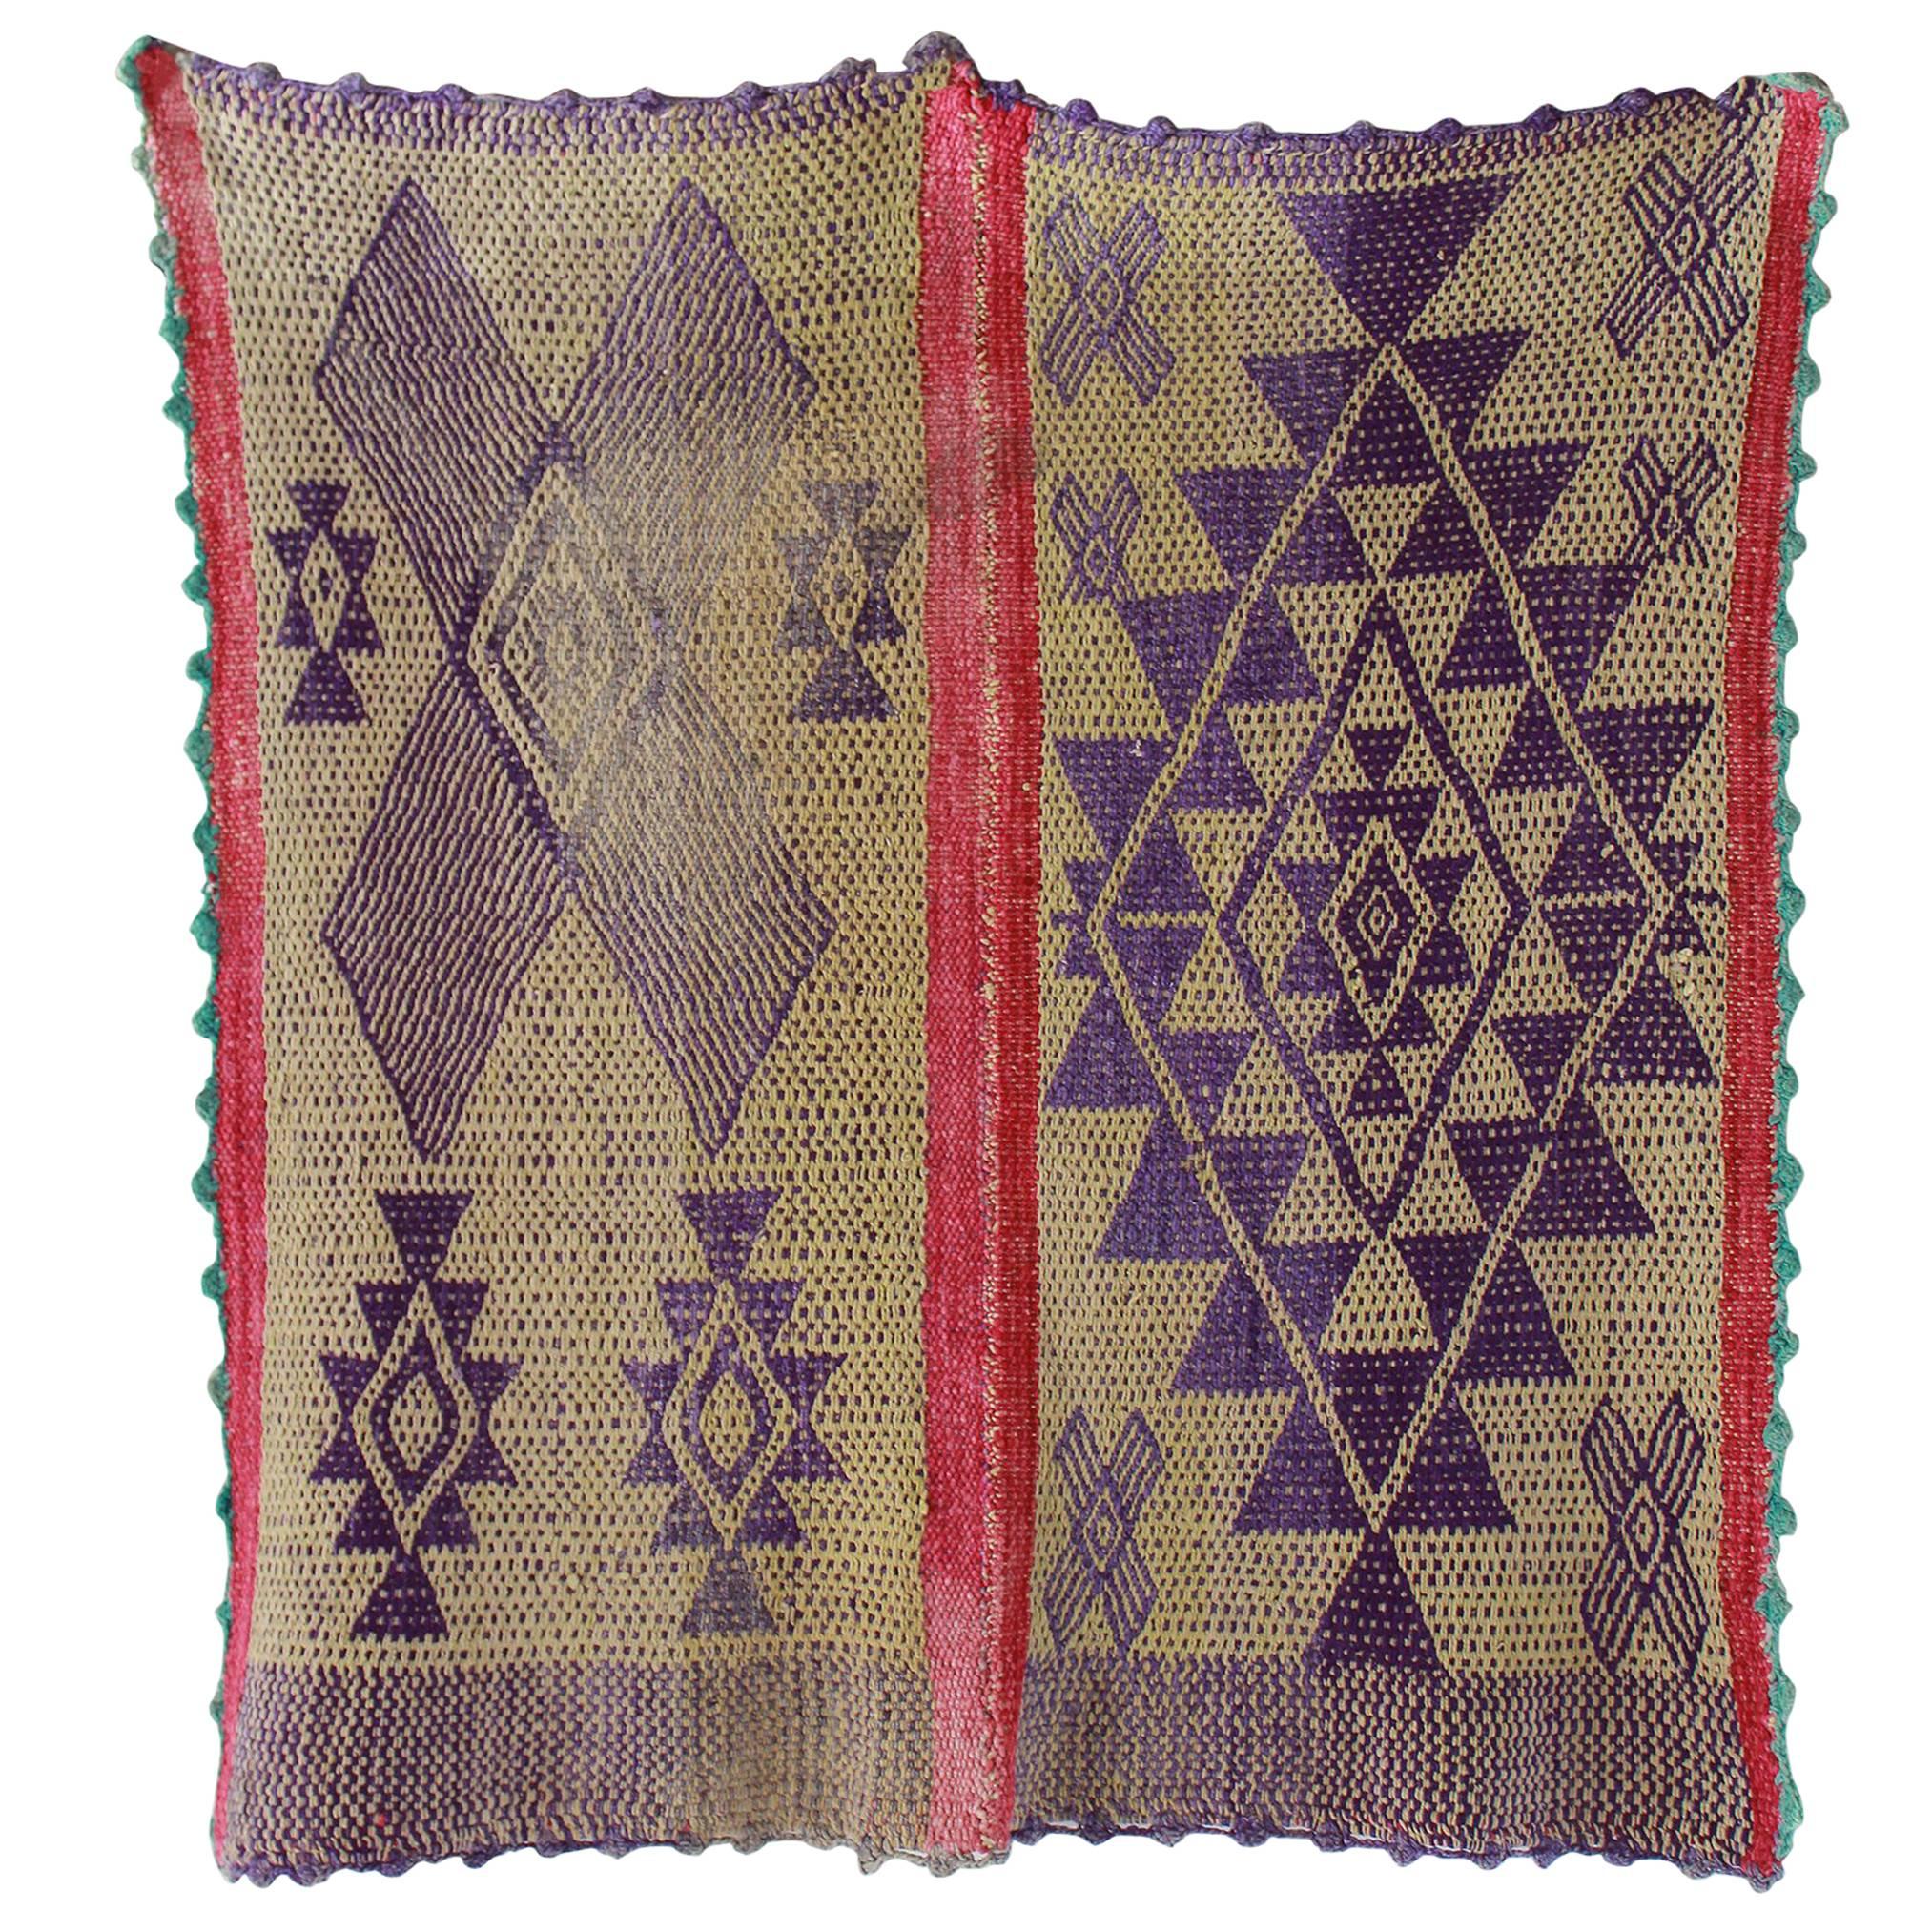 Peruvian Handwoven Textile with Violet Geometric Details